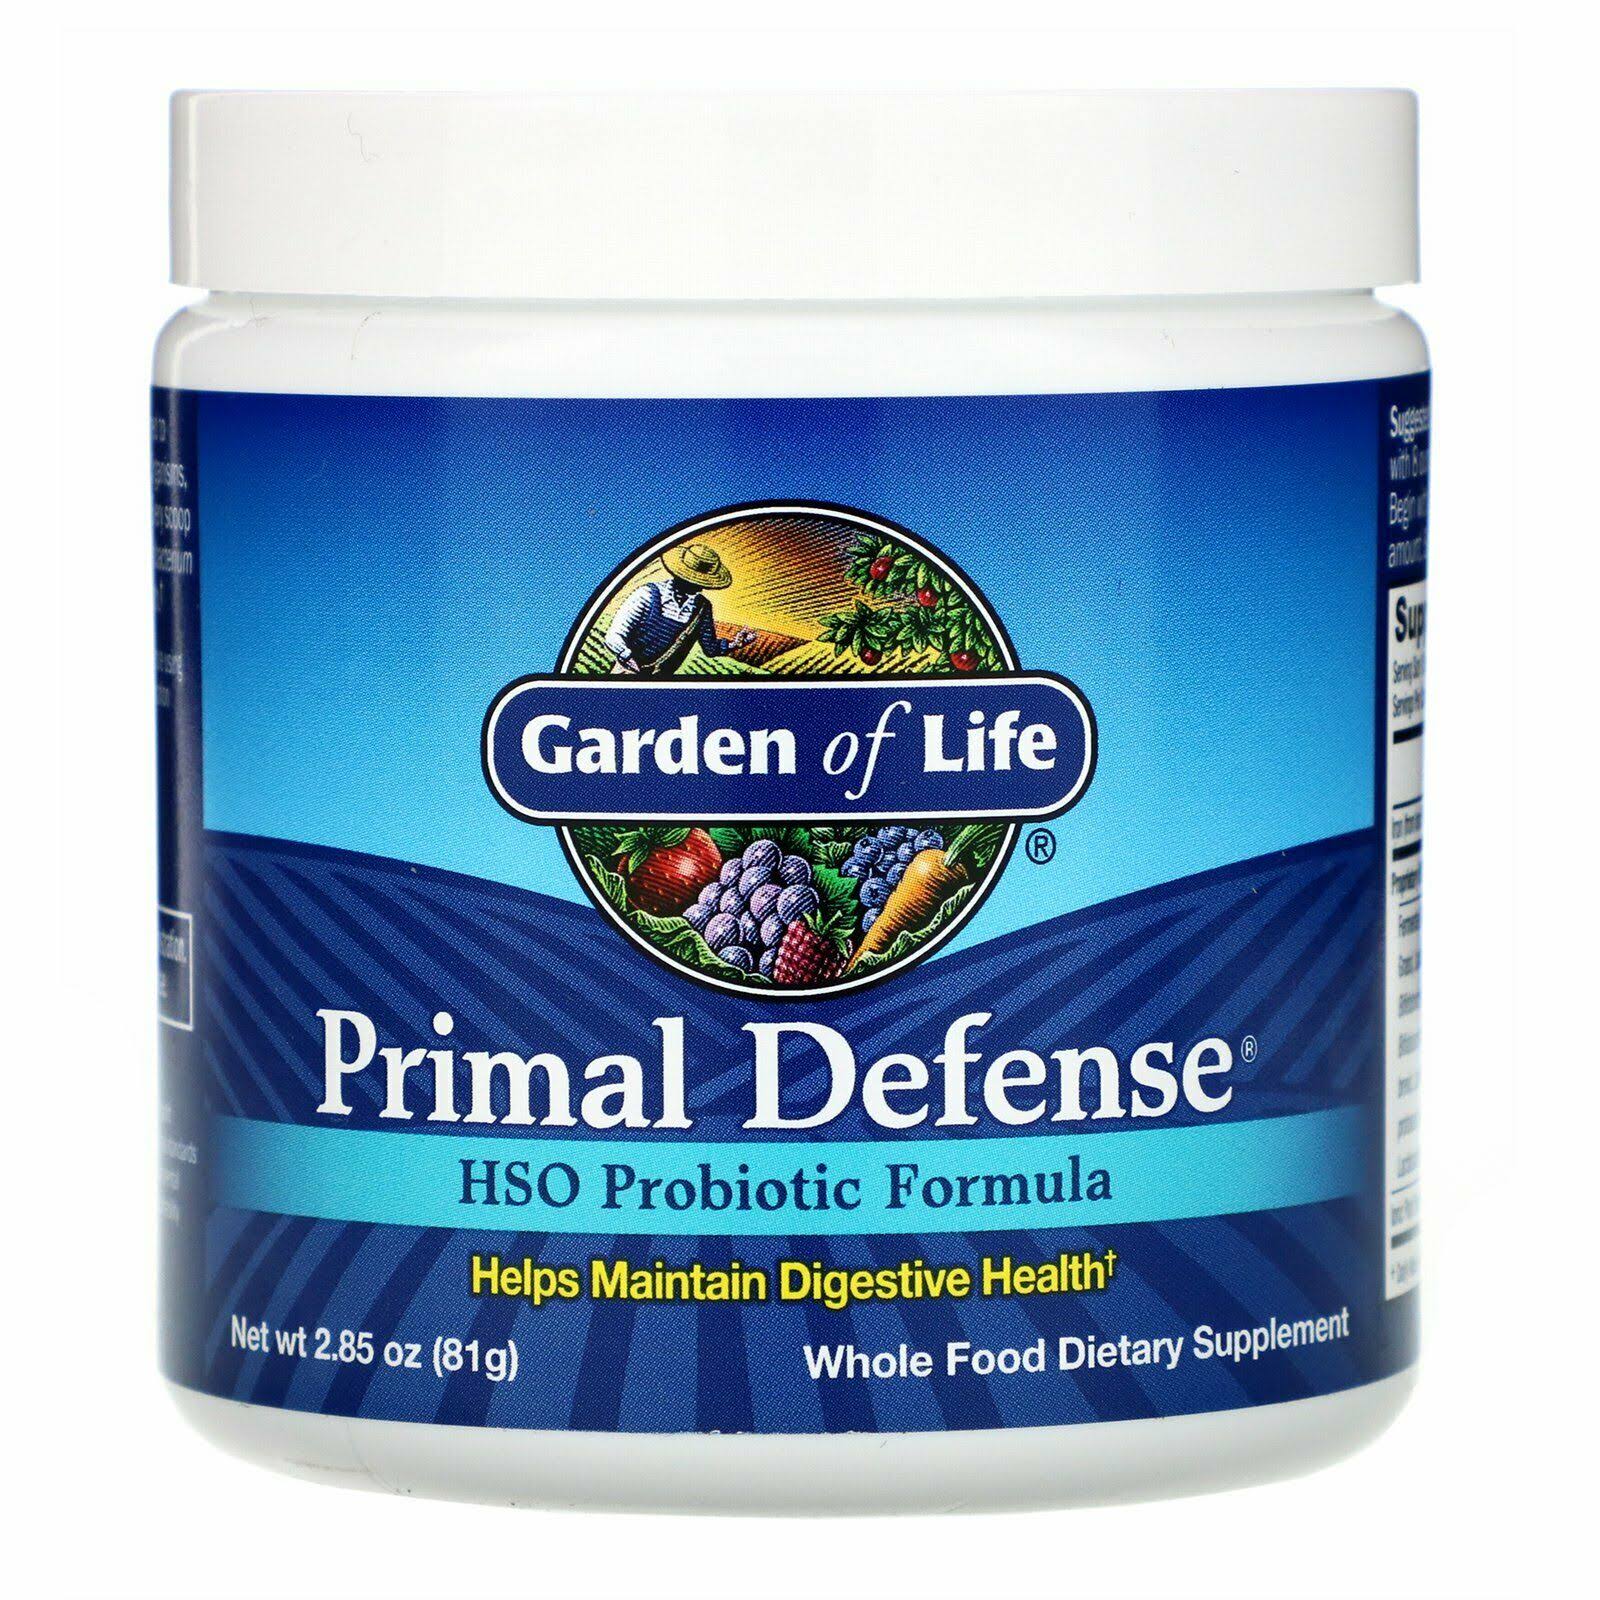 Garden Of Life Primal Defense HSO Probiotic Formula Supplement - 81g